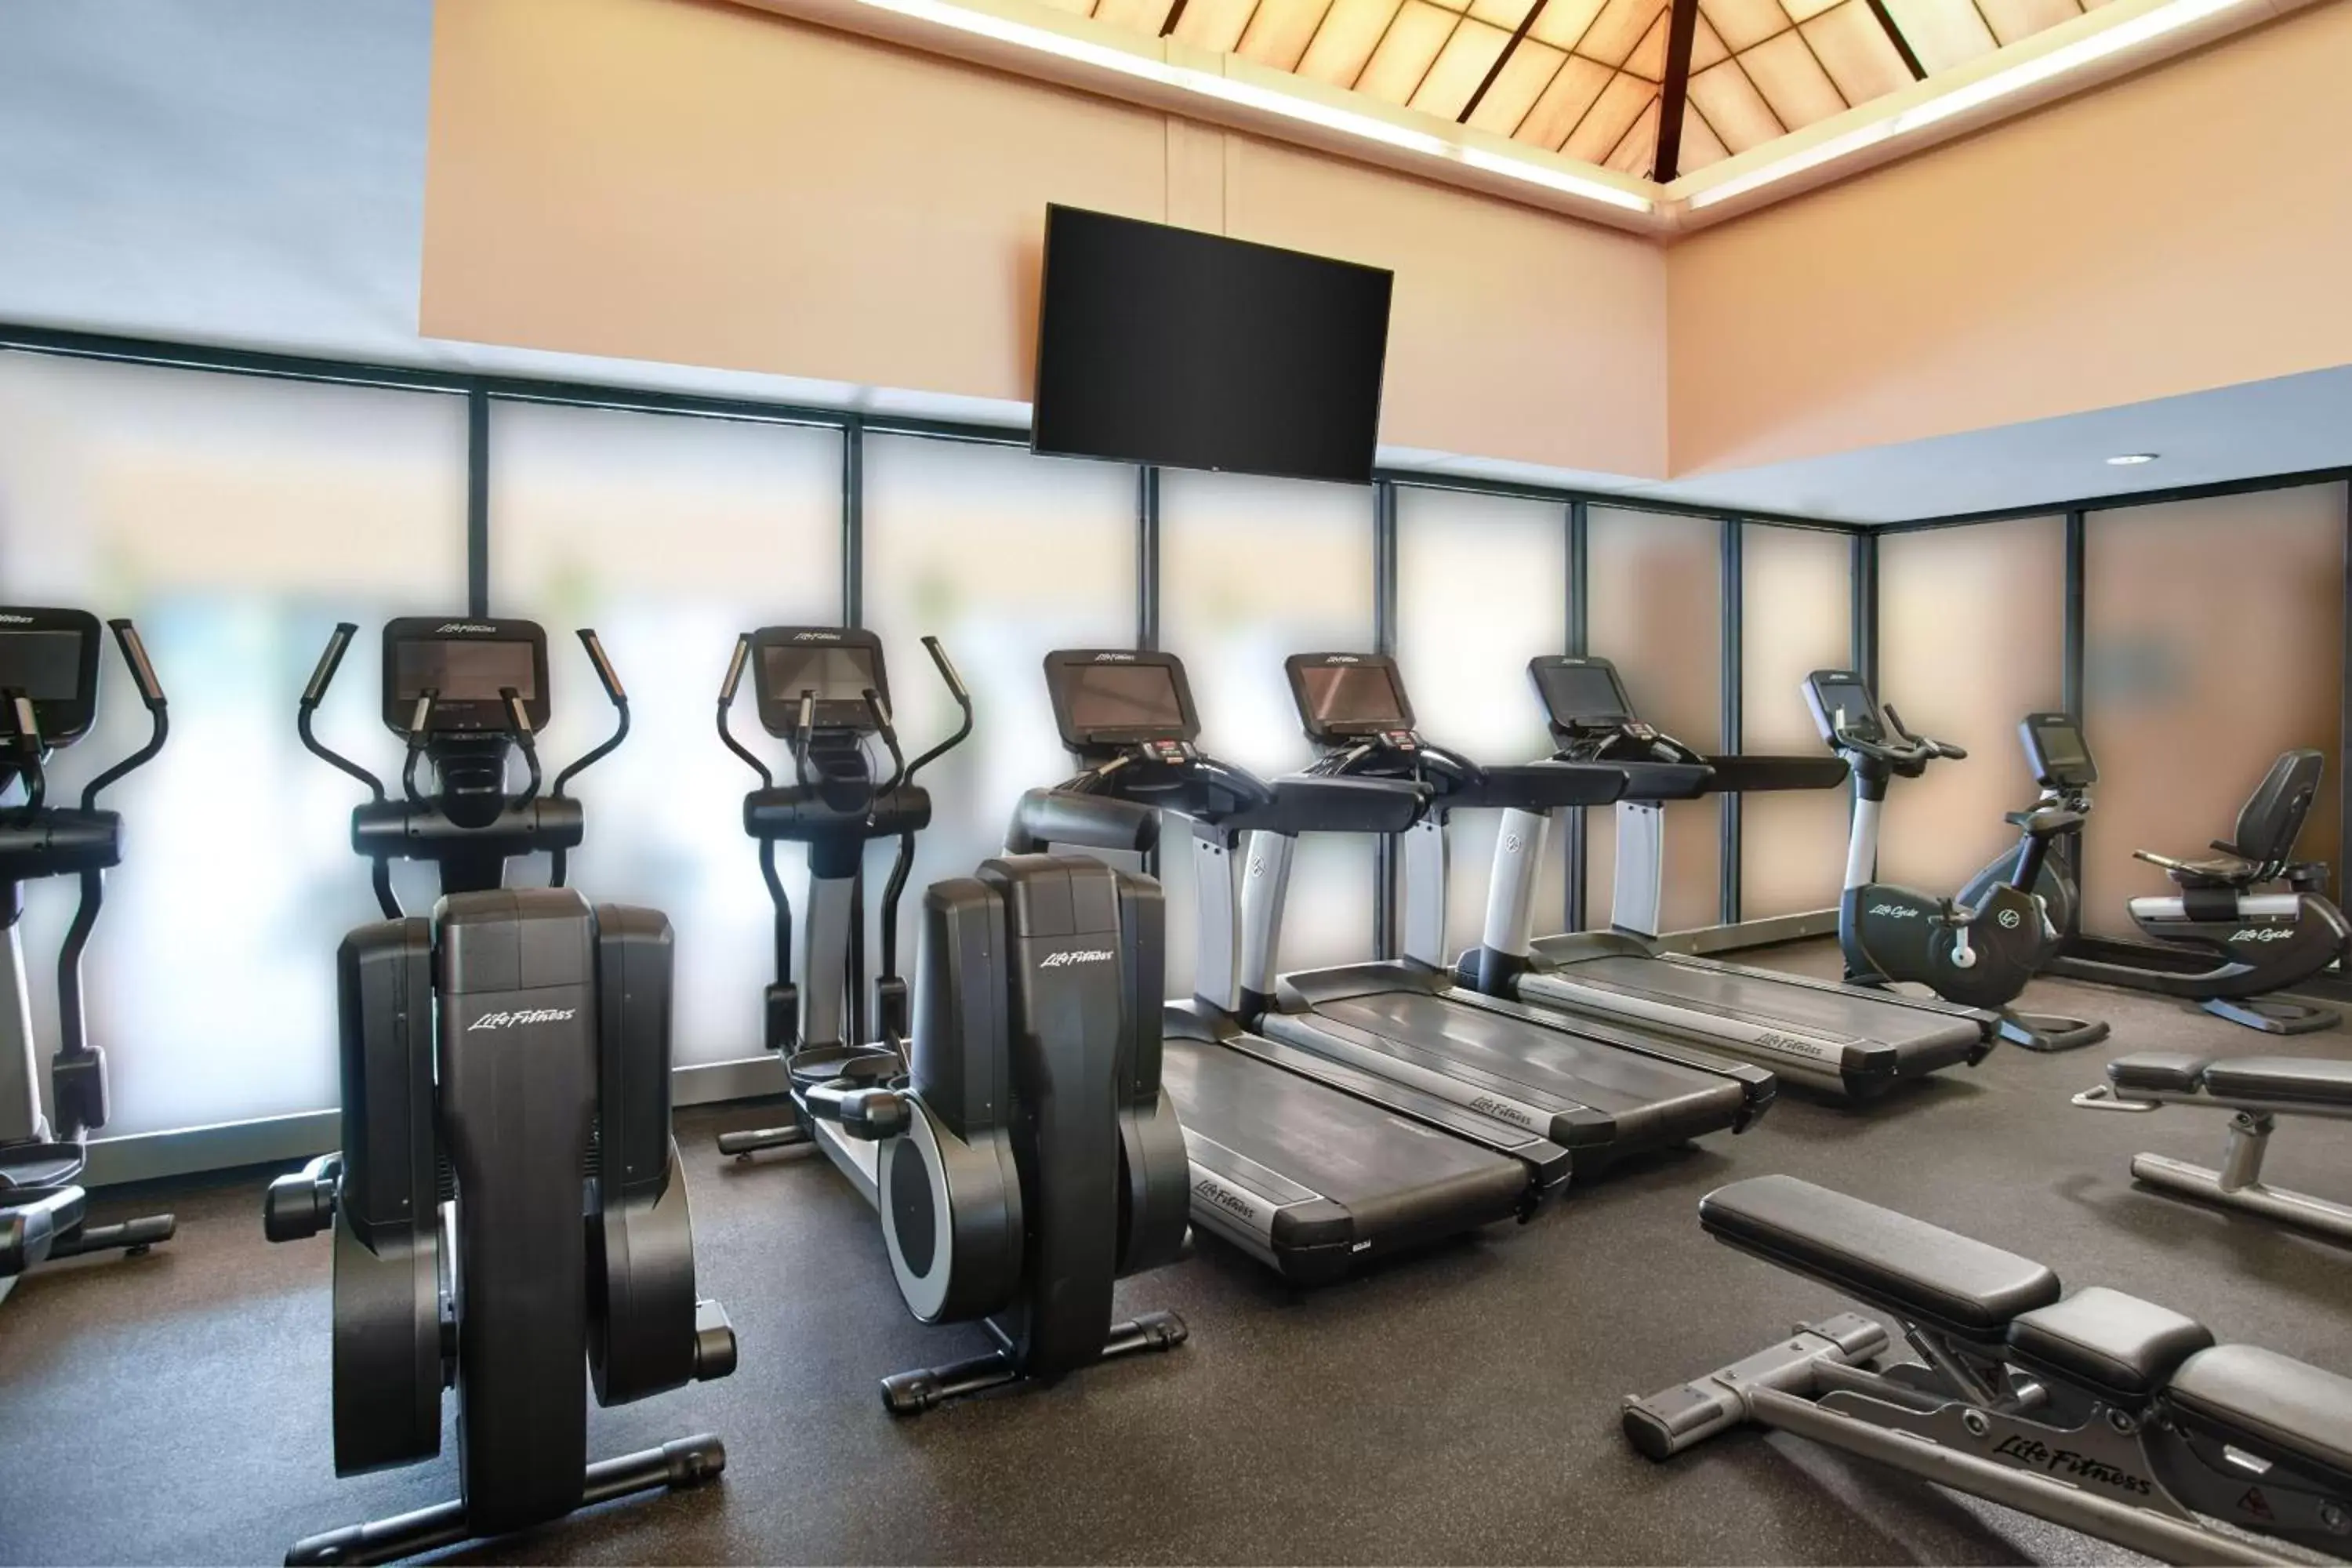 Fitness centre/facilities, Fitness Center/Facilities in Atlanta Marriott Suites Midtown